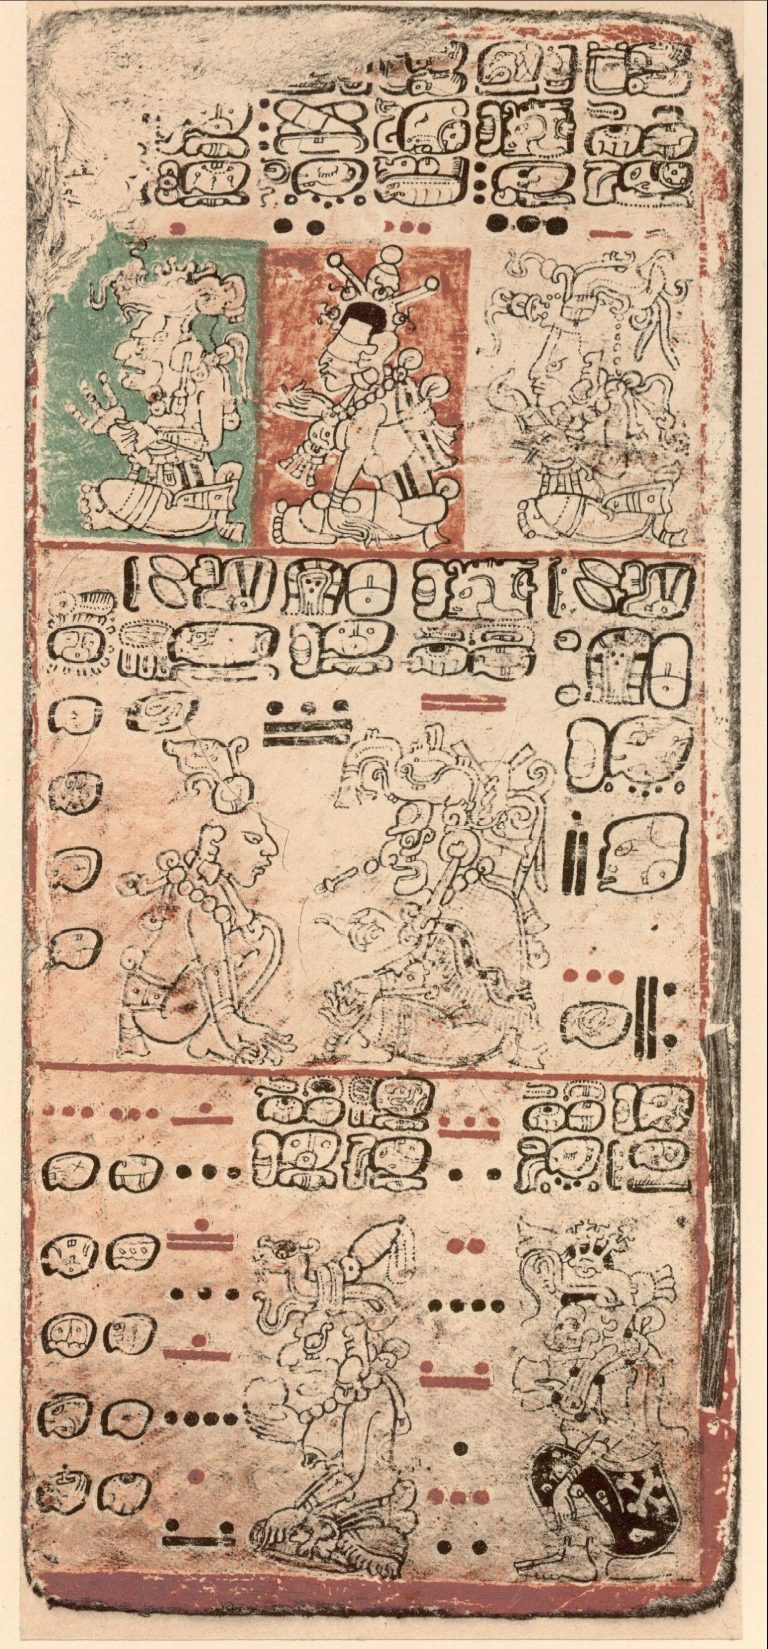 Mayský kodex z Drážďan, na kterém Knorozov dokazuje své objevy.